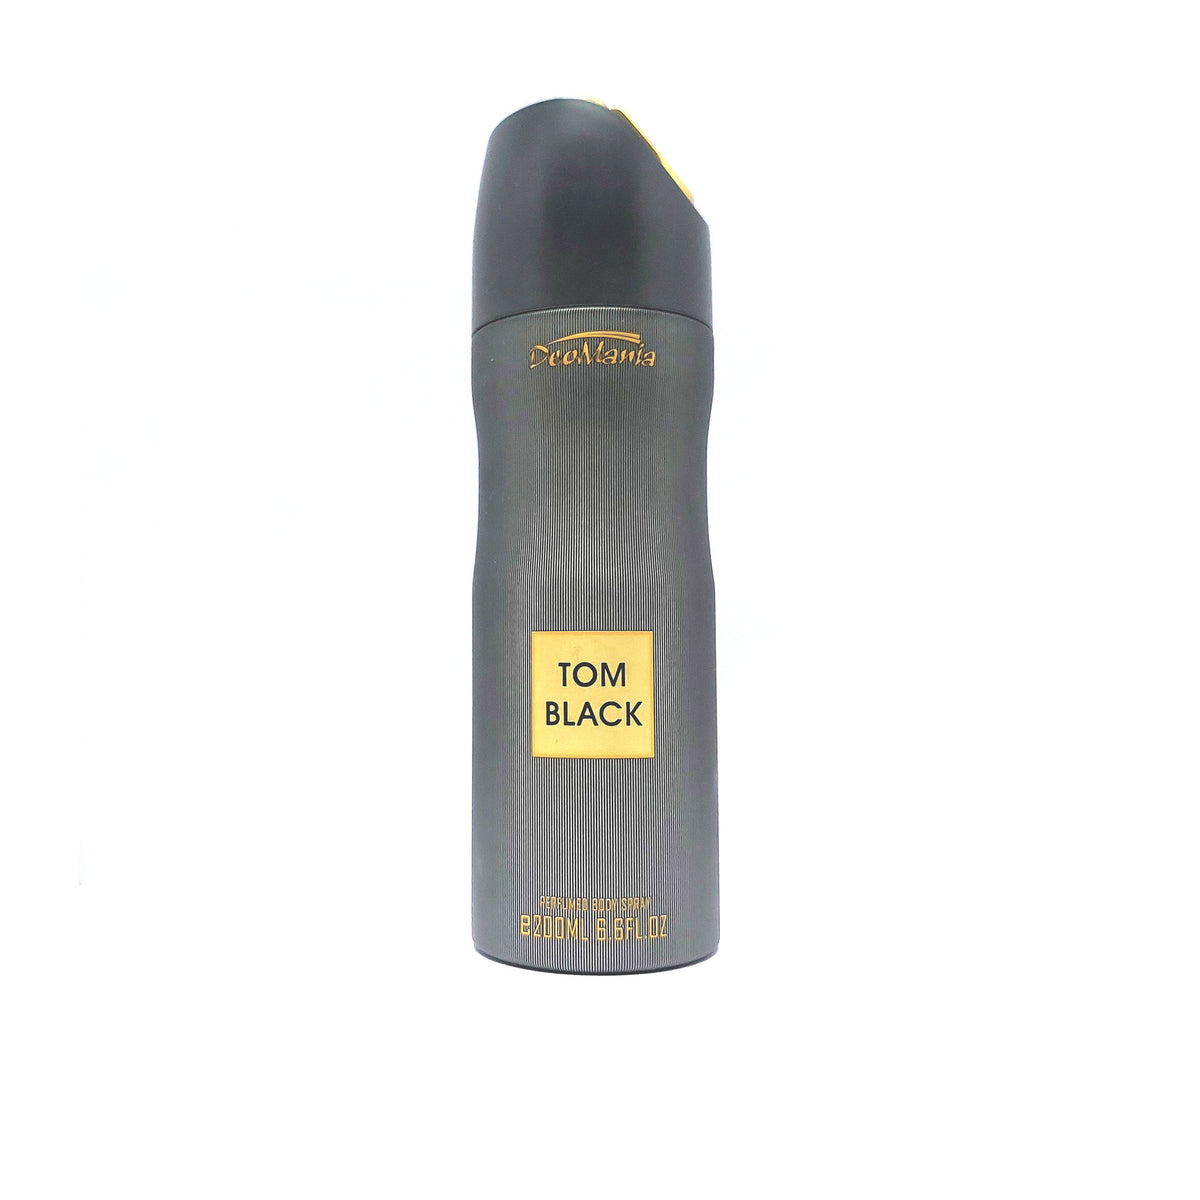 Tom Black by Deo Mania Deodorant Spray For Men - 200ml